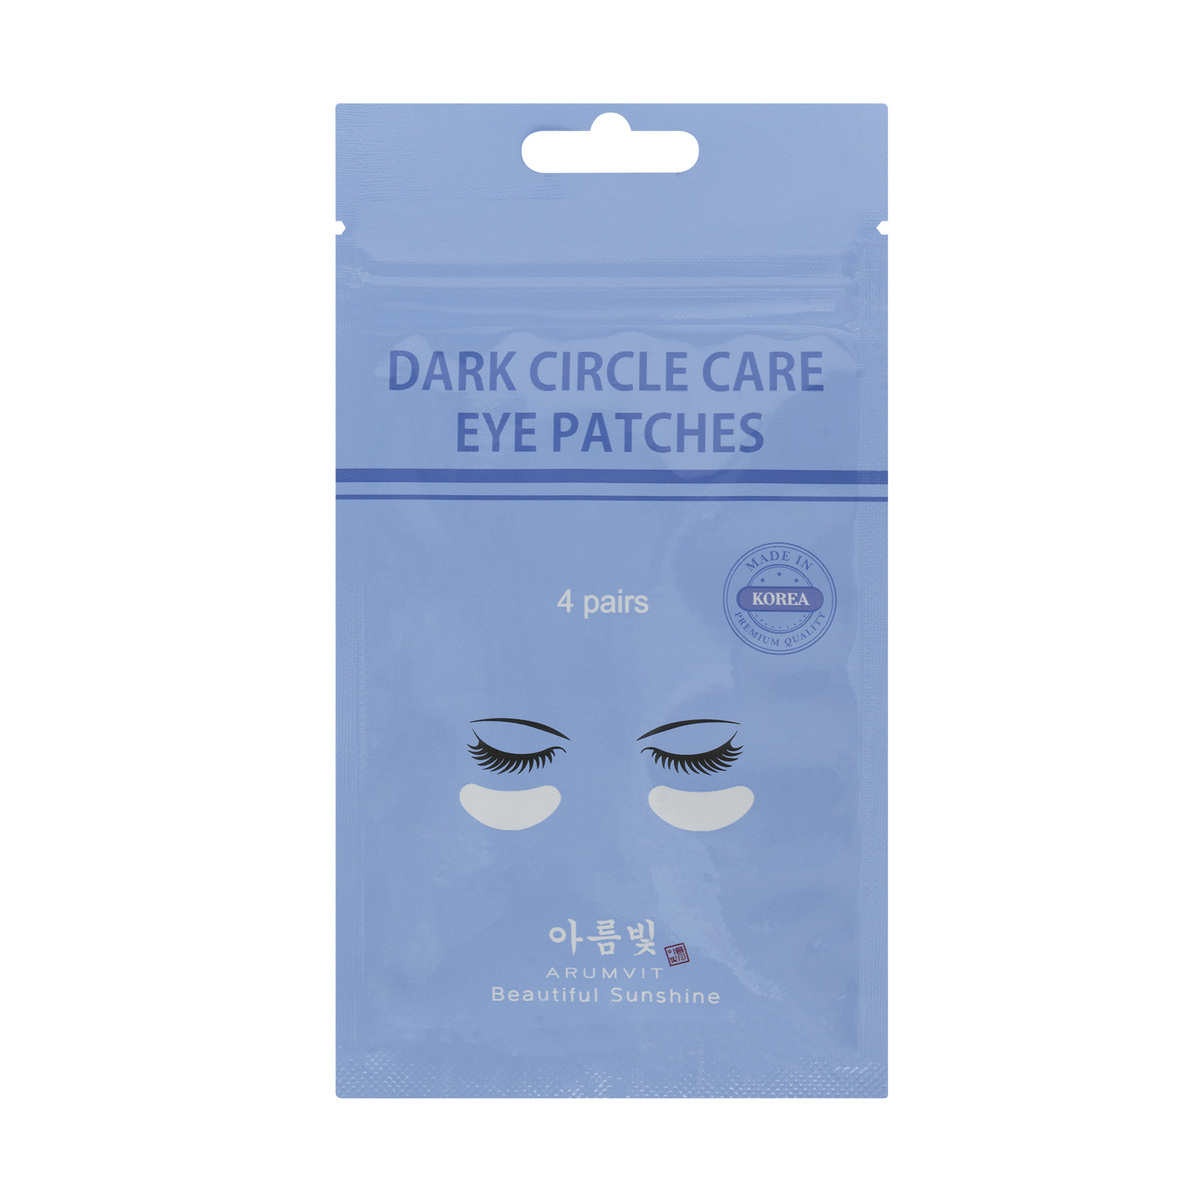 Arumvit Dark Circle Care Eye Patches Pouch 4 Pairs